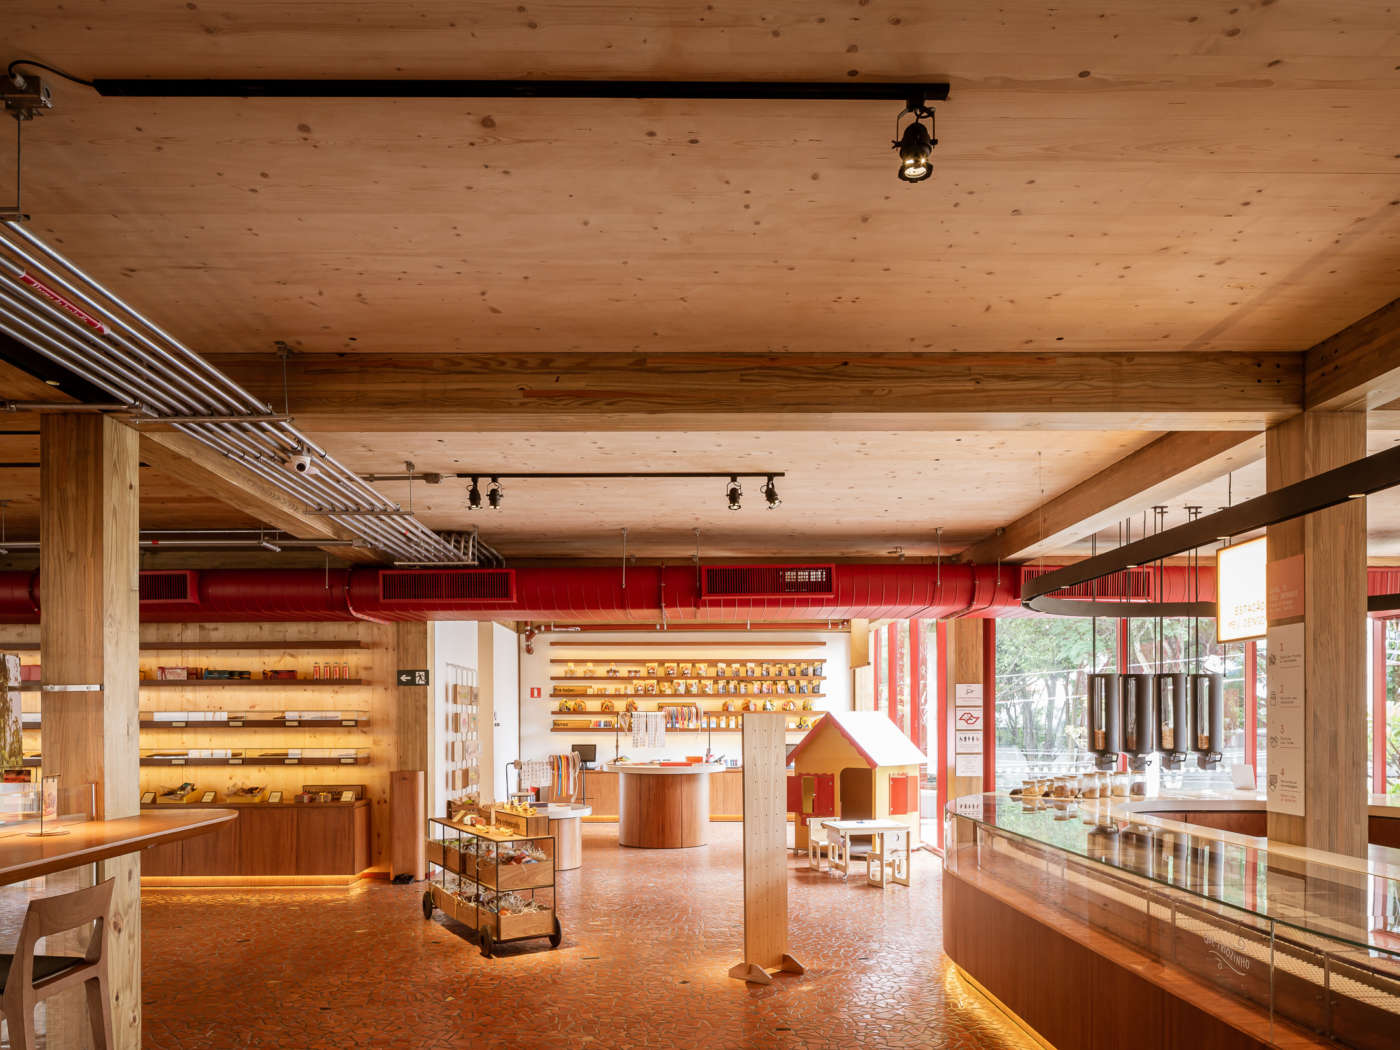 Matheus Farah e Manoel Maia Arquitetura Designs São Paulo Chocolate Shop  With Efficiency in Mind - Interior Design